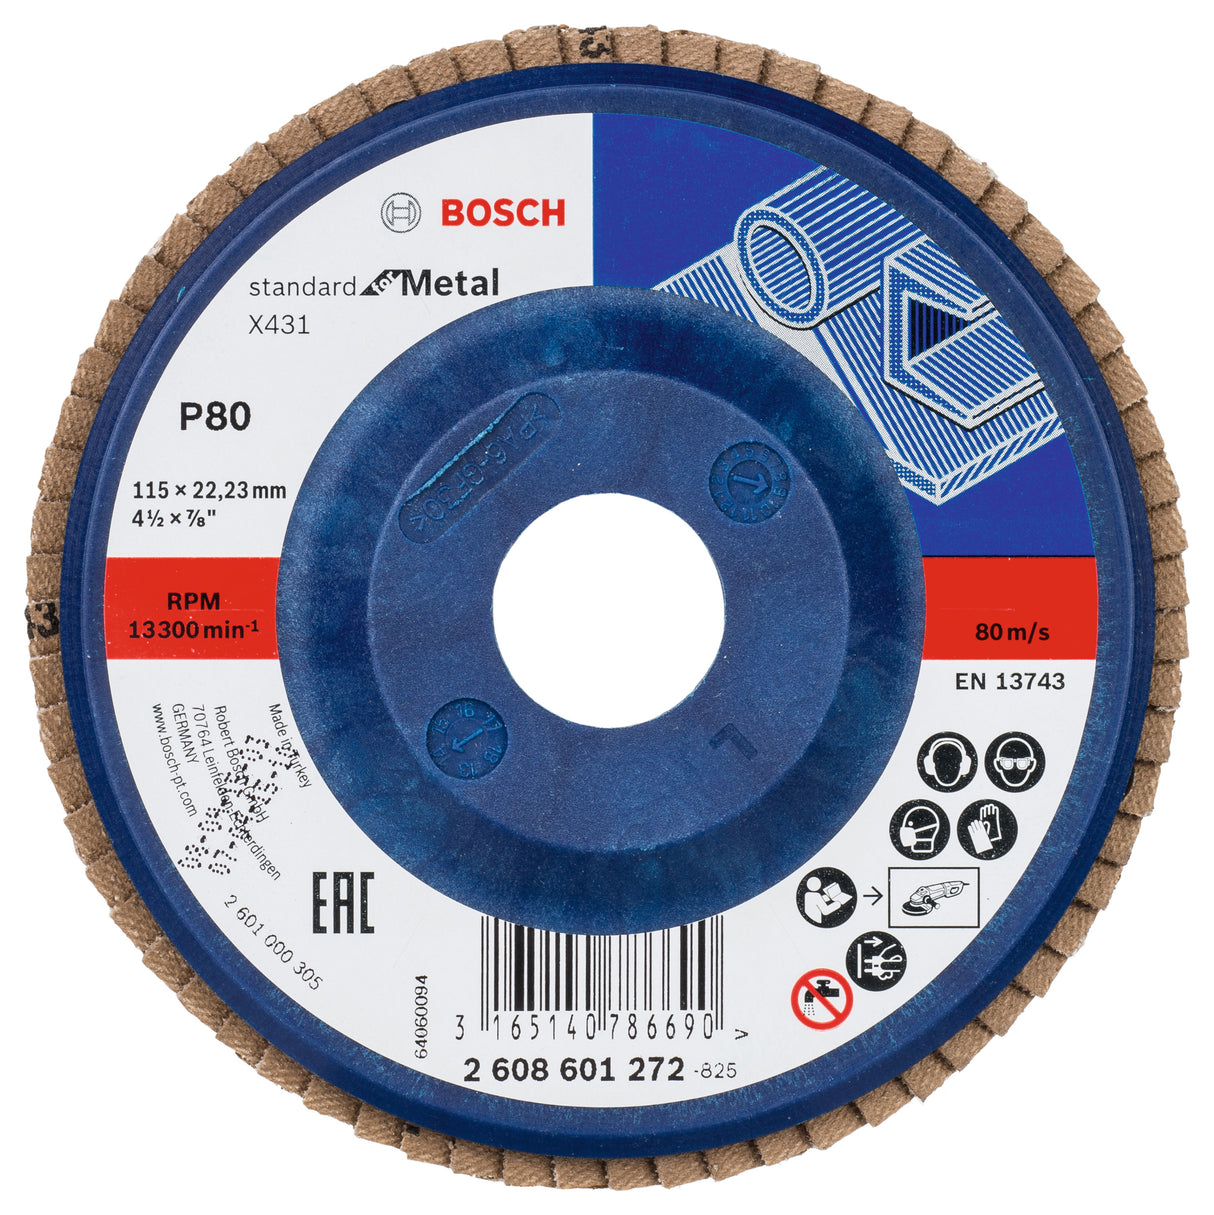 Bosch Professional X431 Flap Disc - Standard for Metal, 115mm x 22.23mm, G80